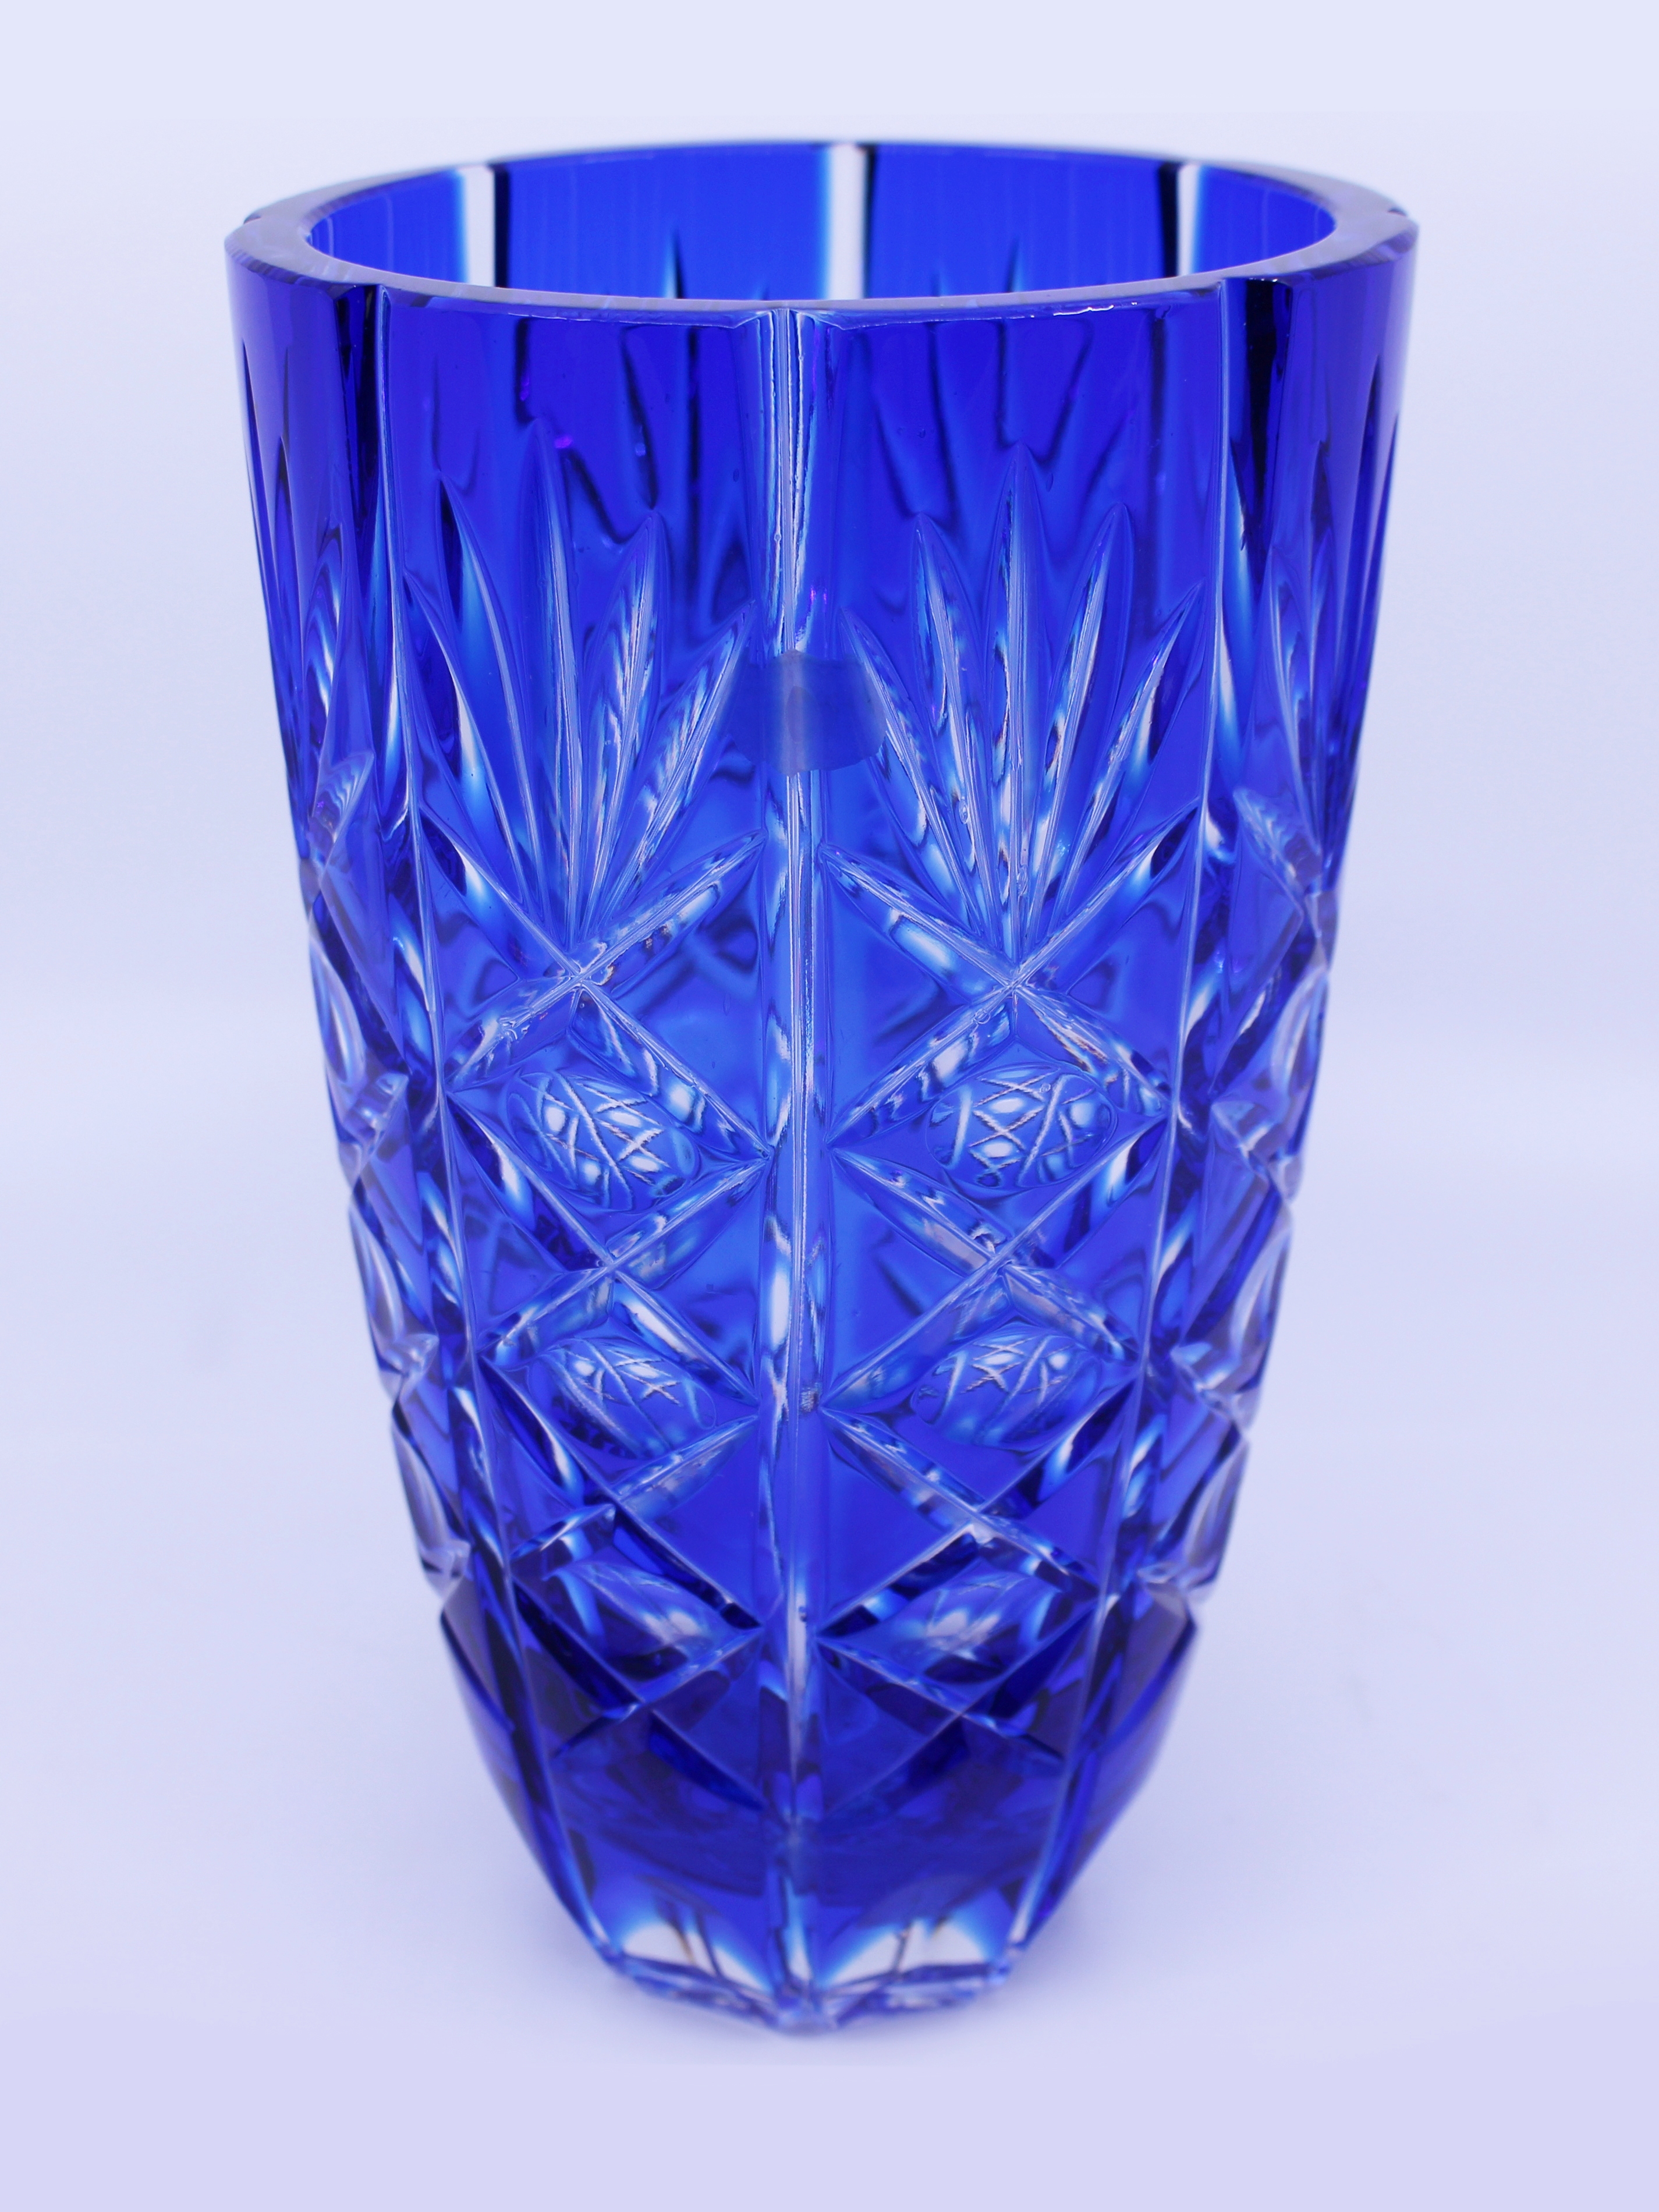 English Vintage Blue Overlay Crystal Glass Vase - Image 6 of 6